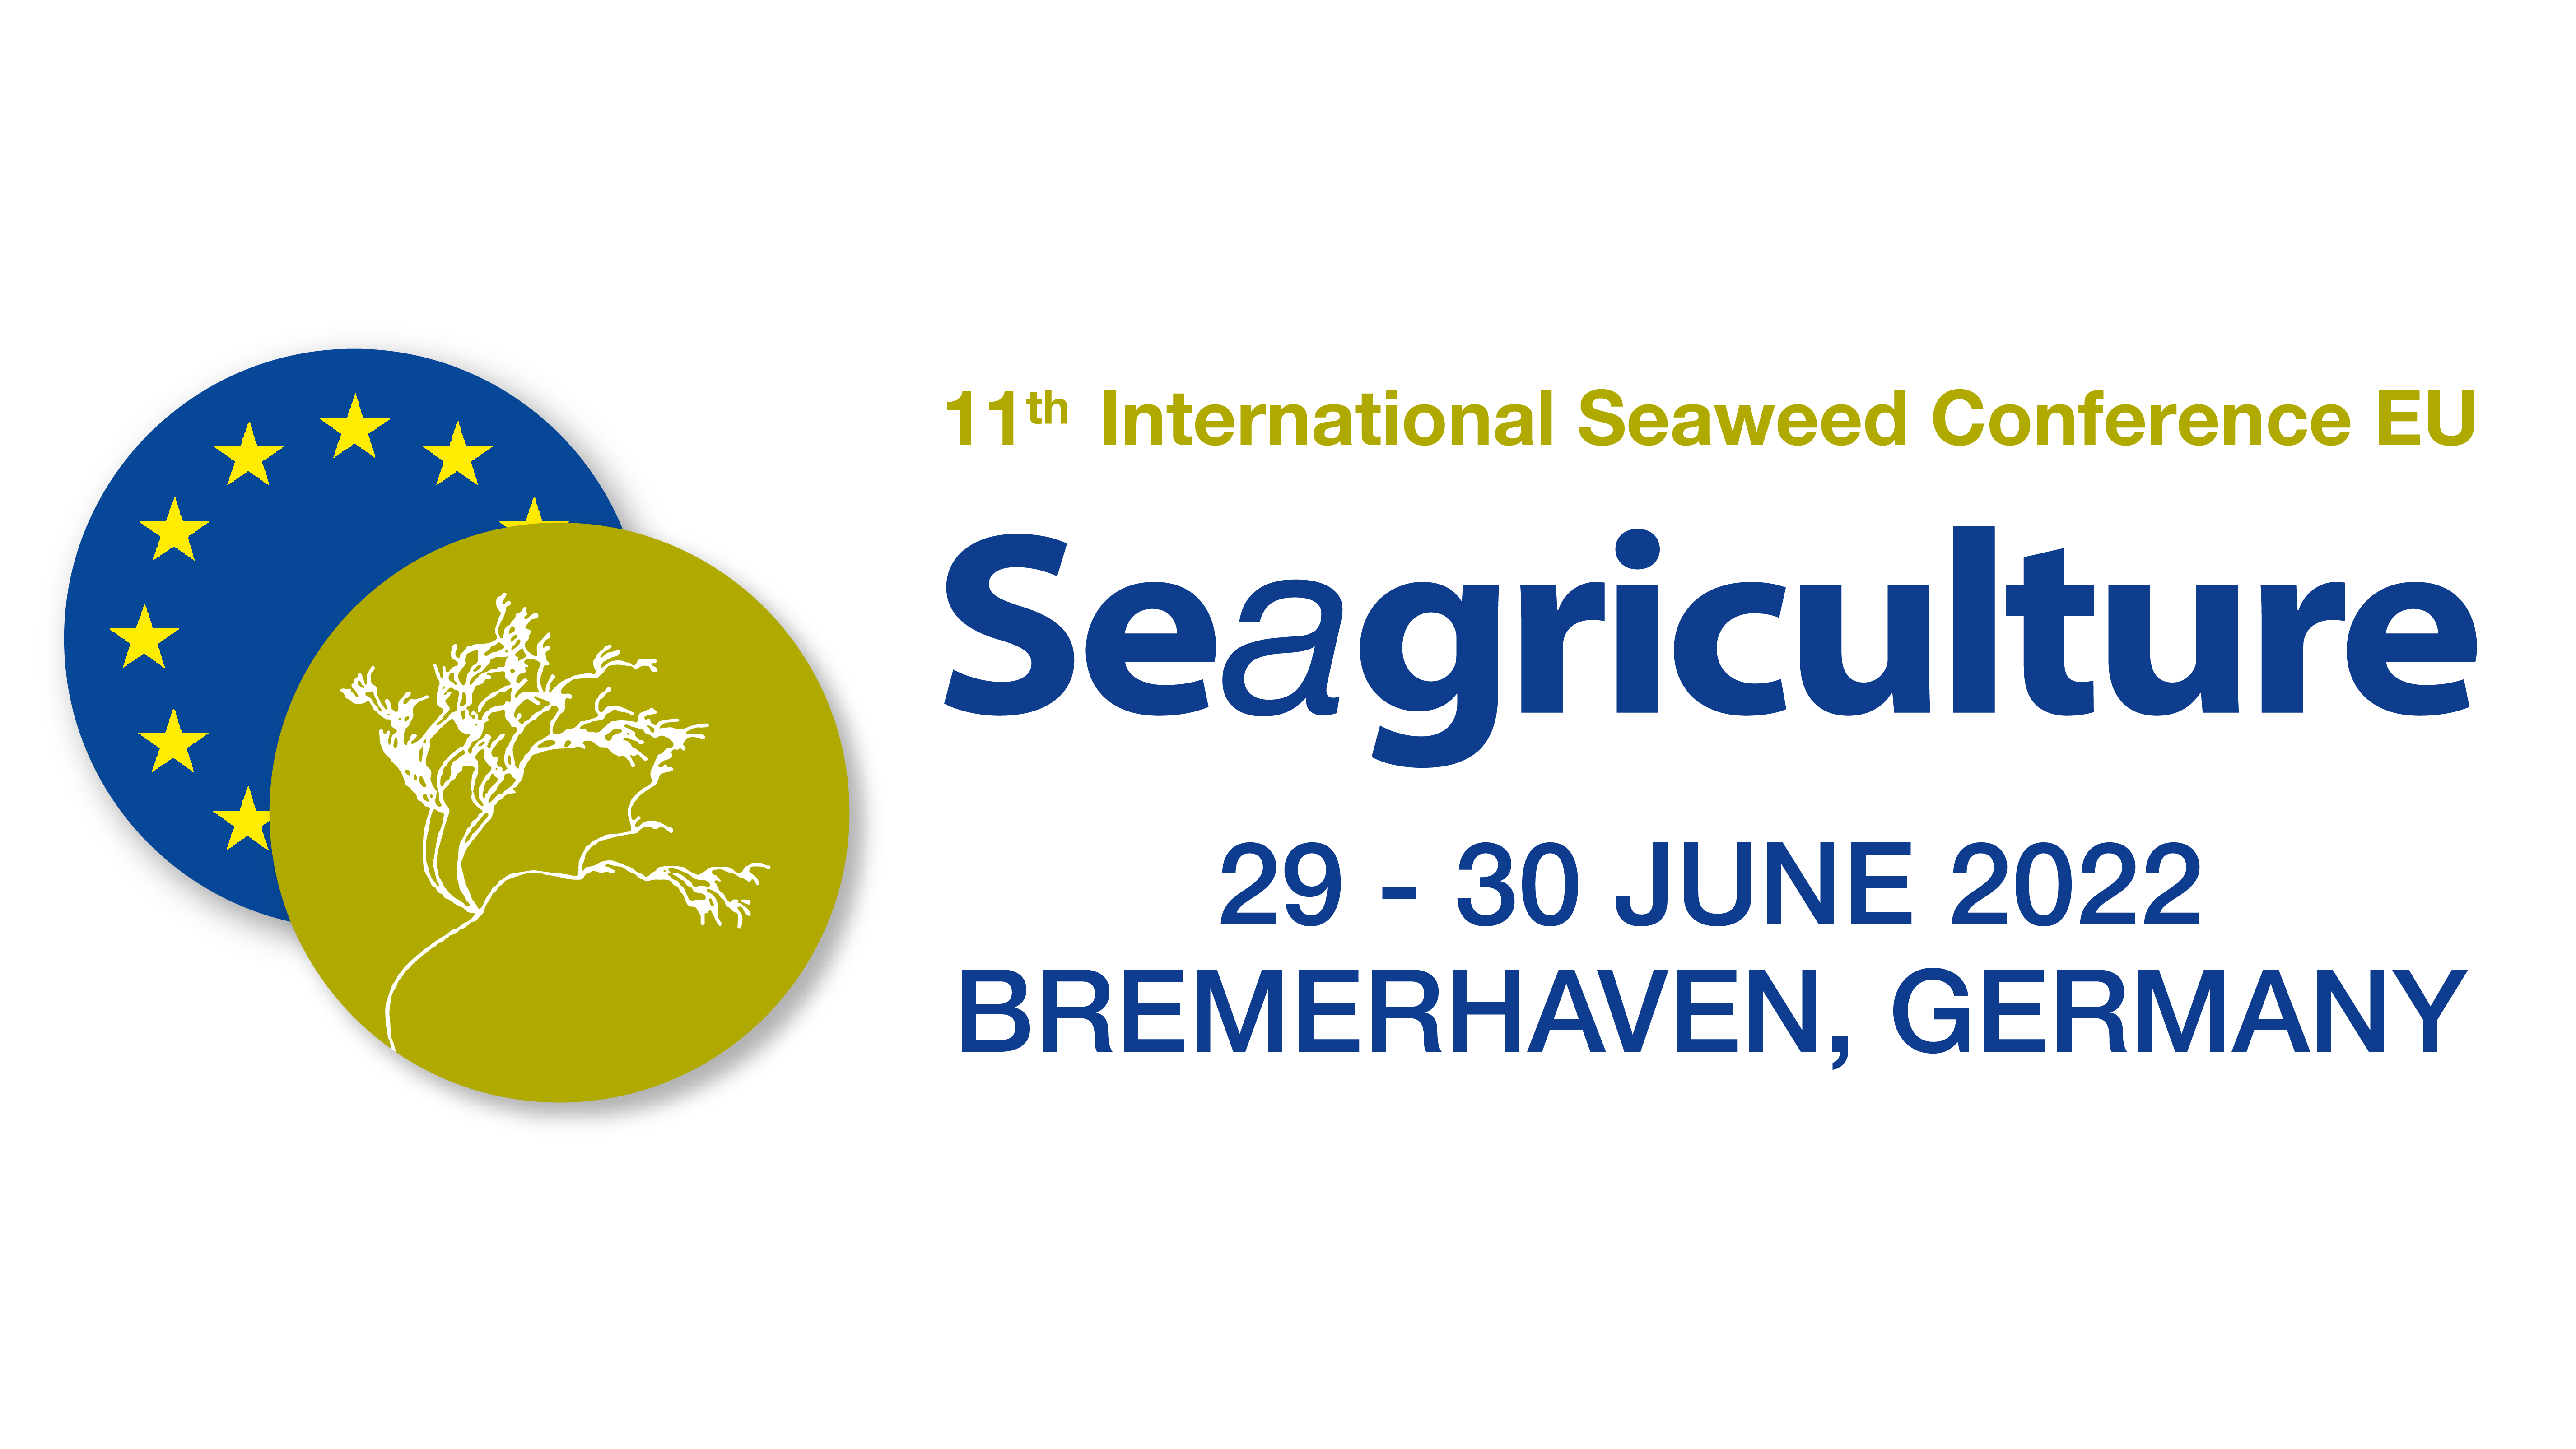 Seagriculture_EU2022_logo-1qalg2bh2